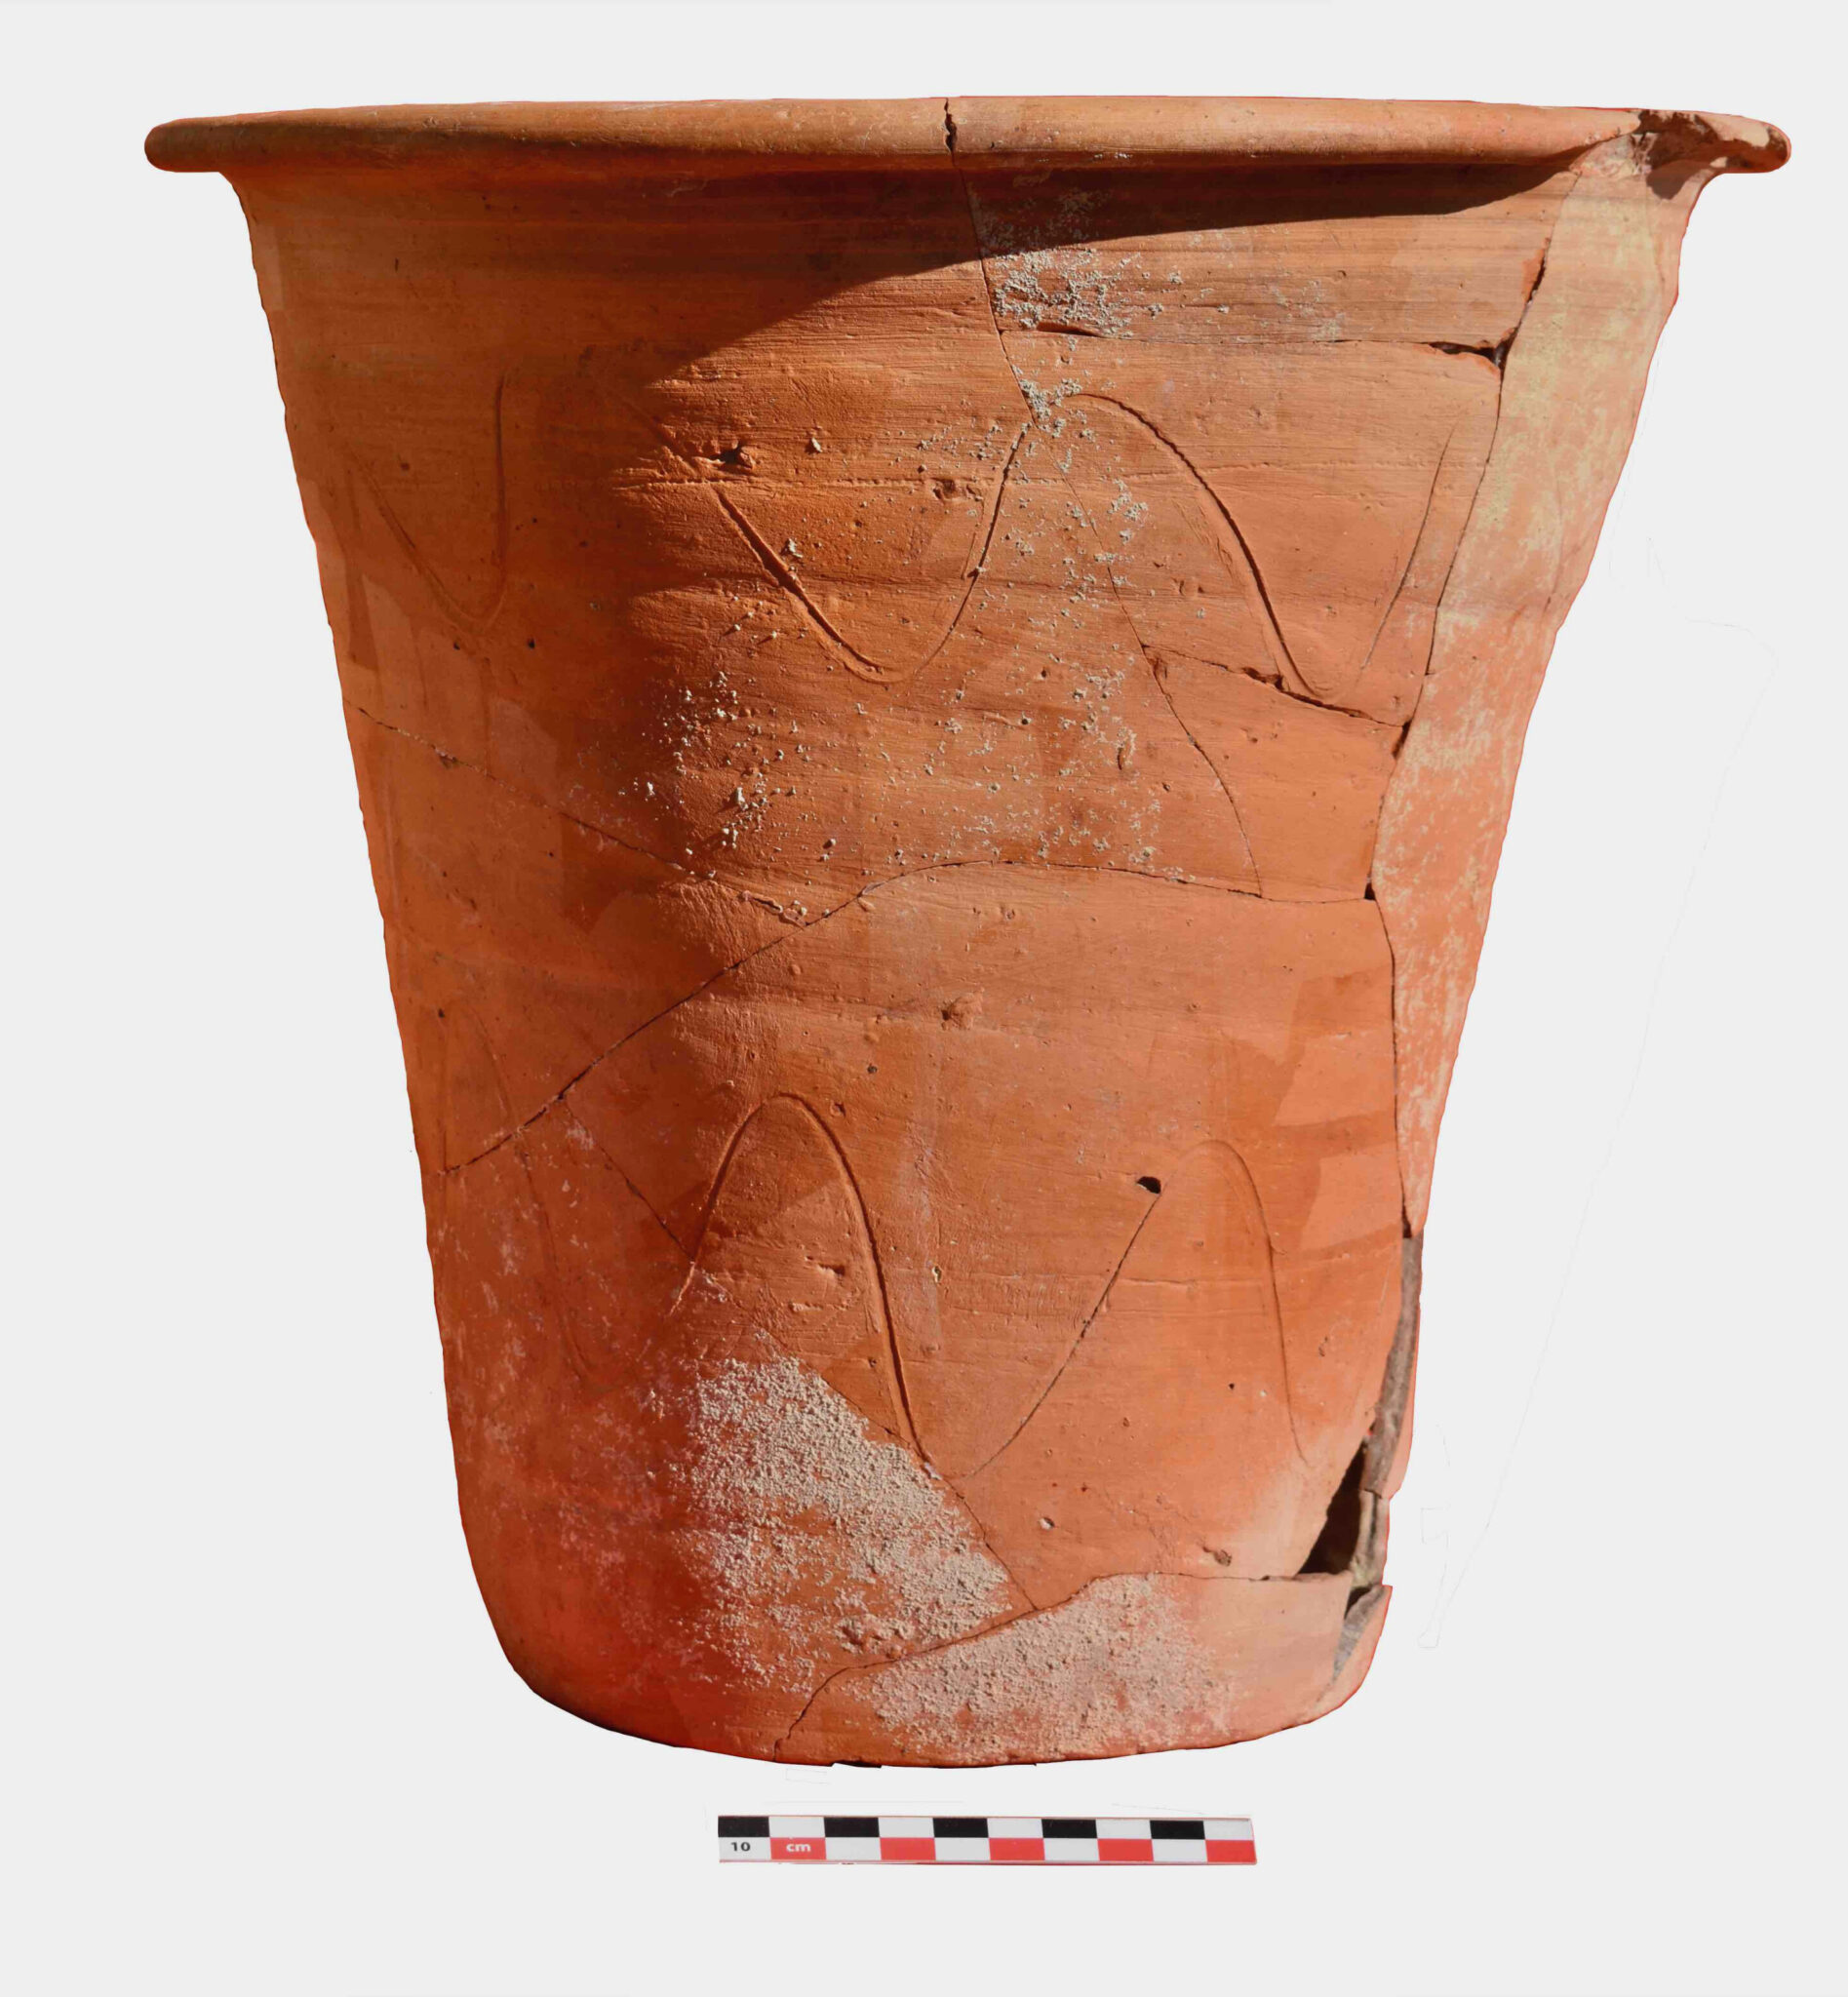 Ancient parasite eggs identify Roman chamber pot